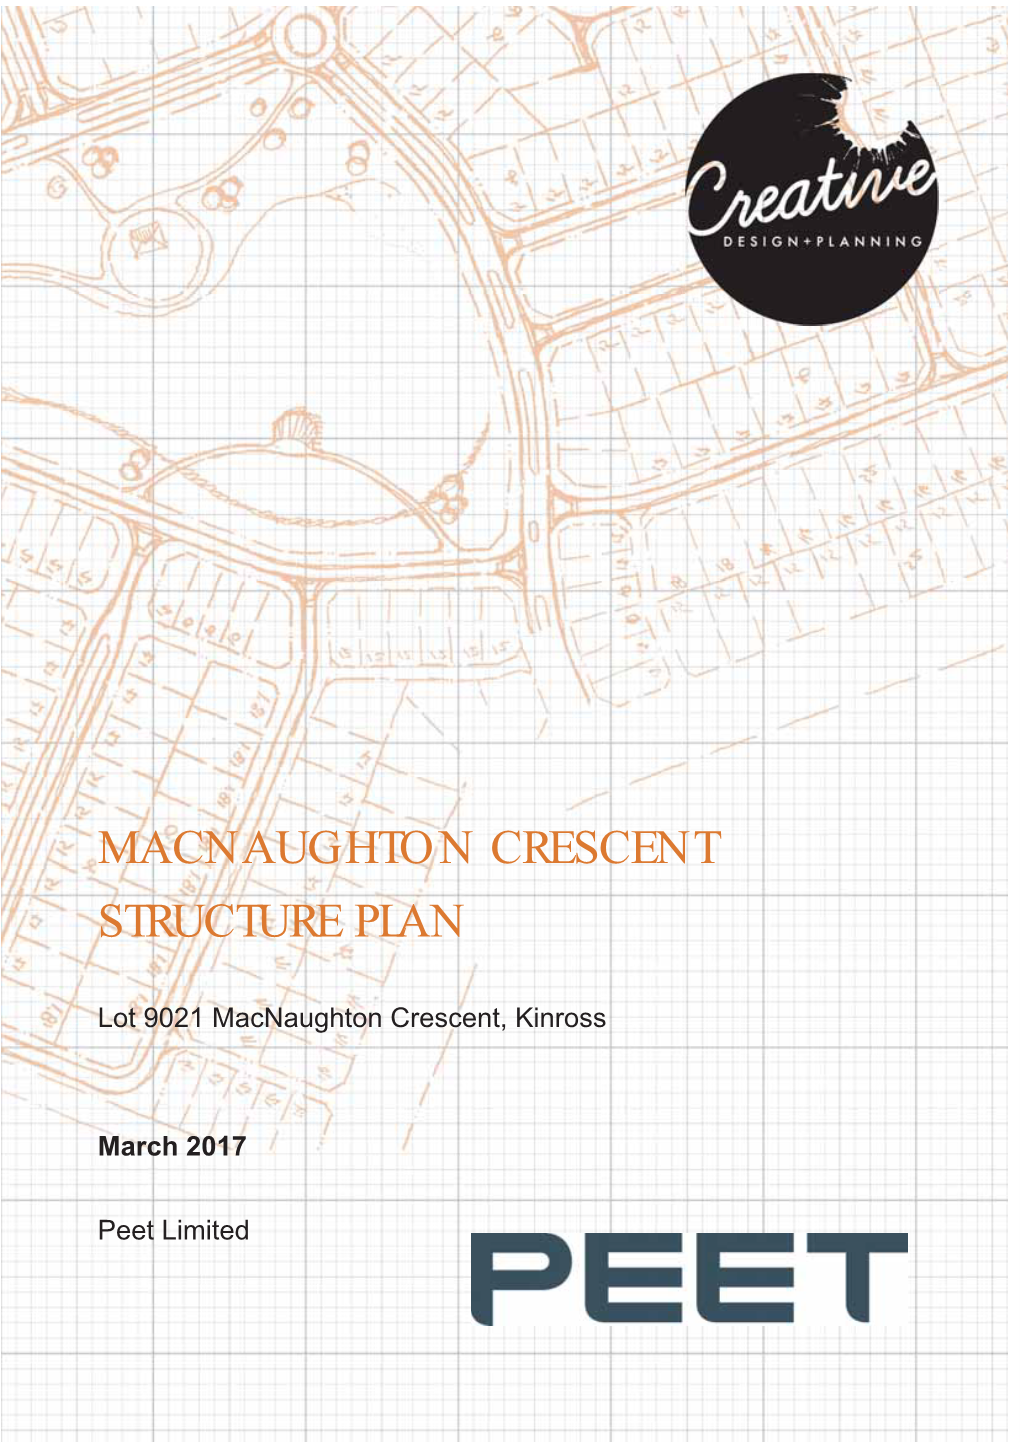 Macnaughton Crescent Structure Plan  /Rw0Df1dxjkwrq&Uhvfhqw.Lqurvv   0Dufk 